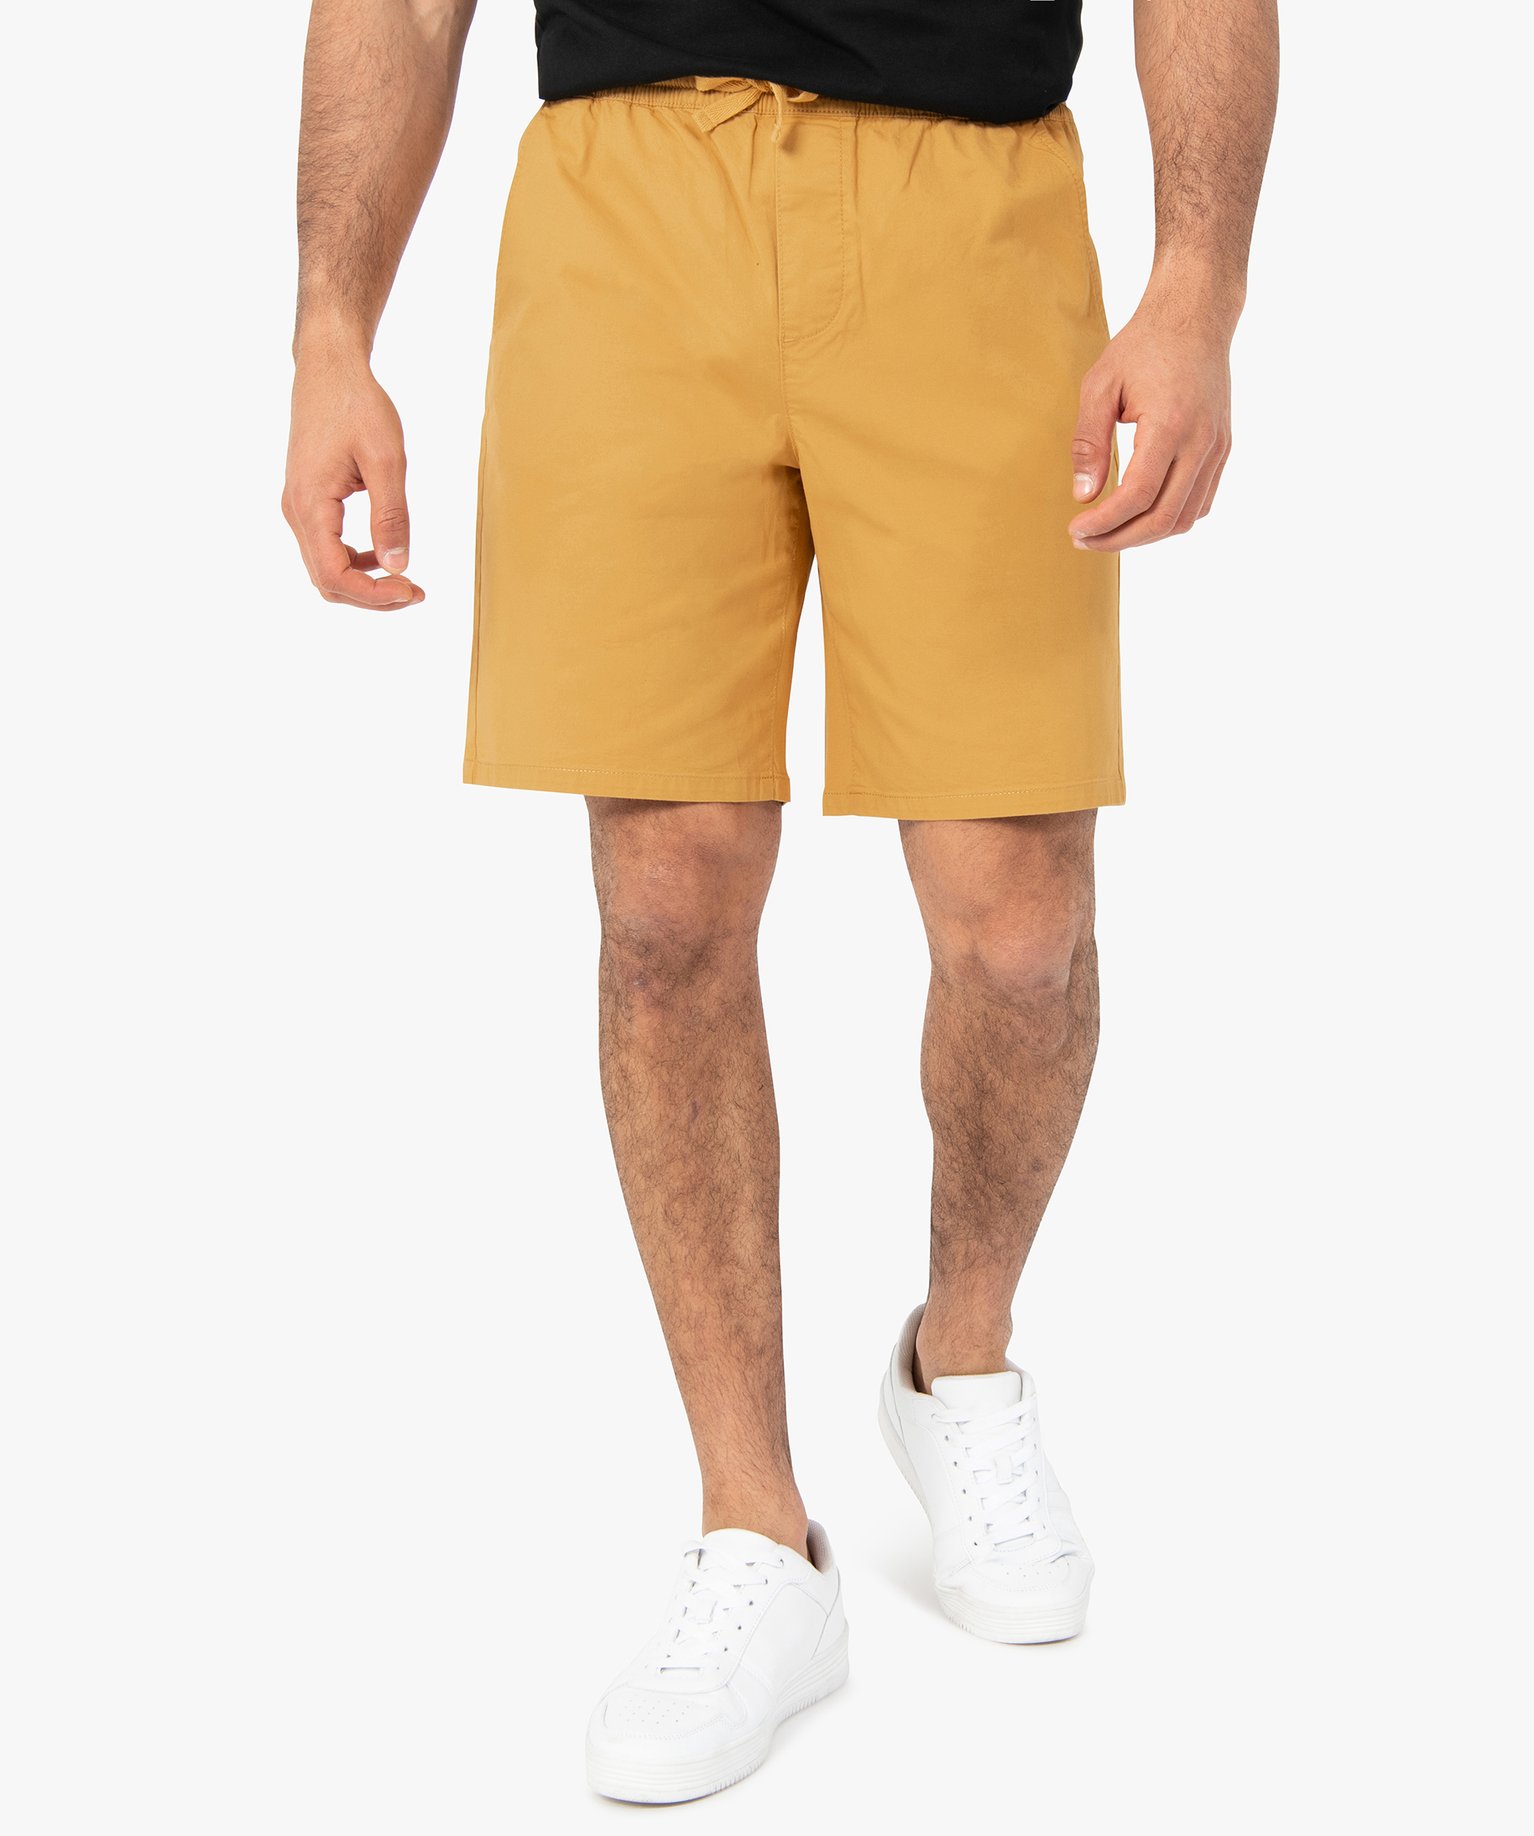 bermuda homme en coton stretch jaune